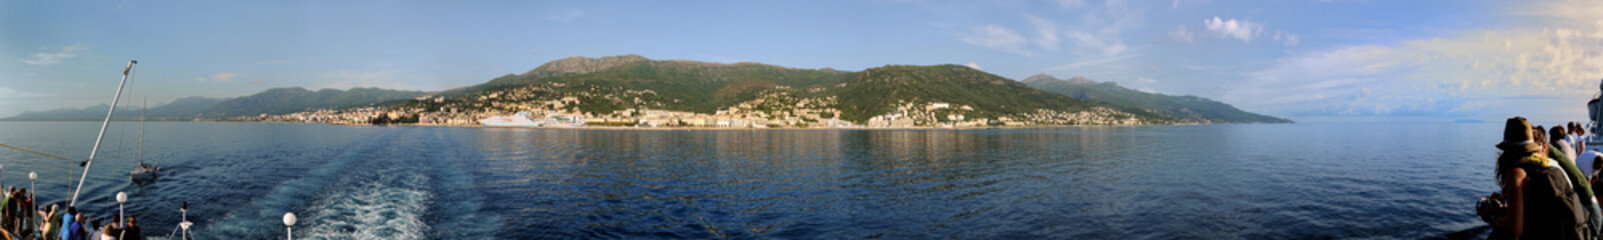 Korsyka panorama